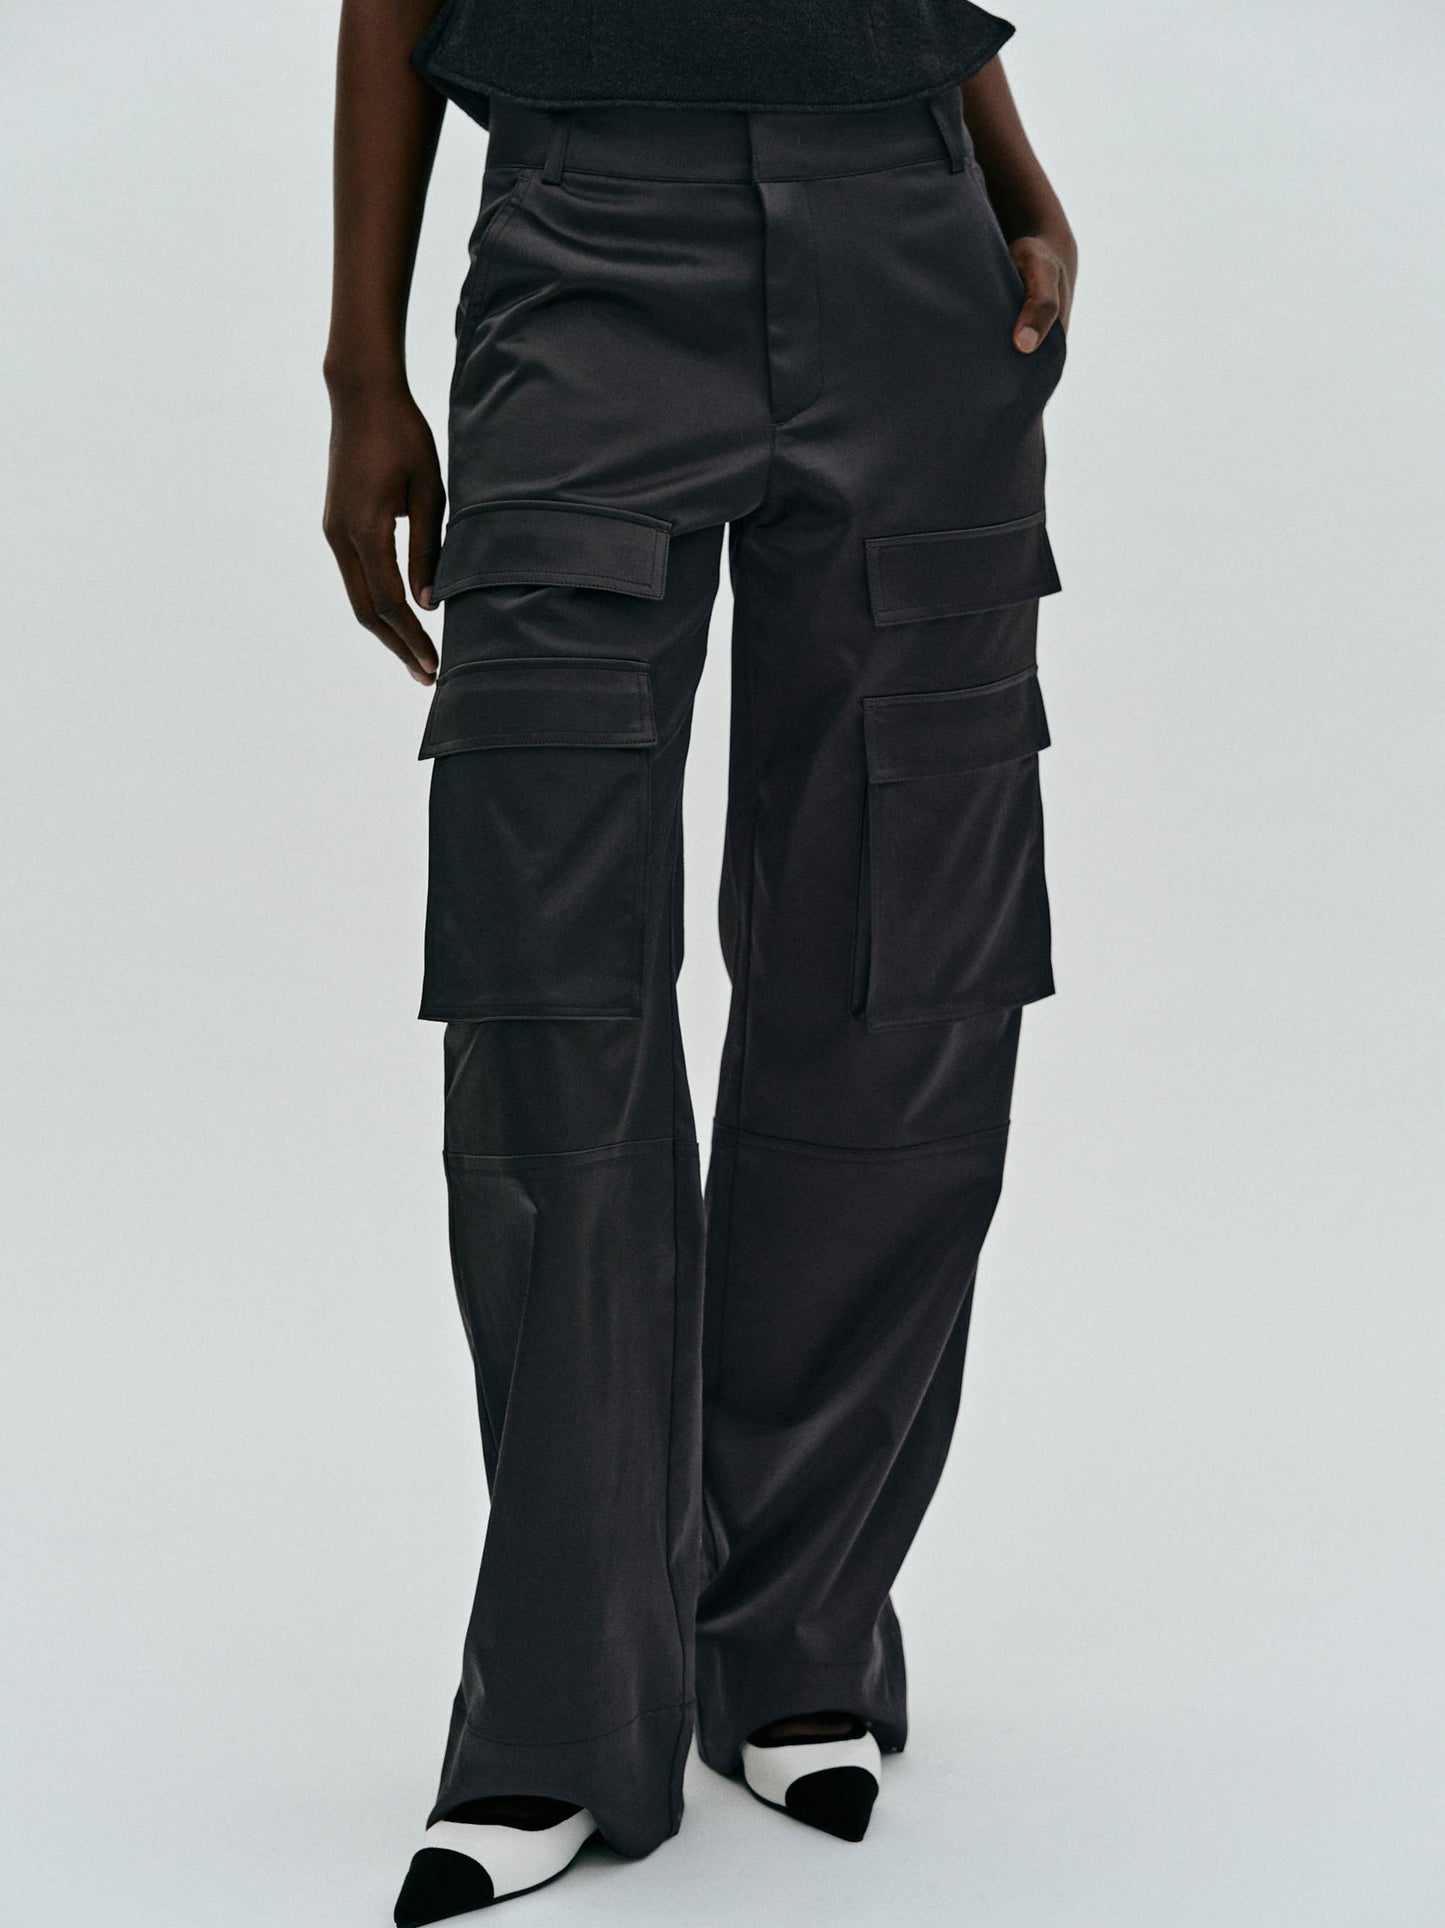 Satin Suit Cargo Trousers, Black